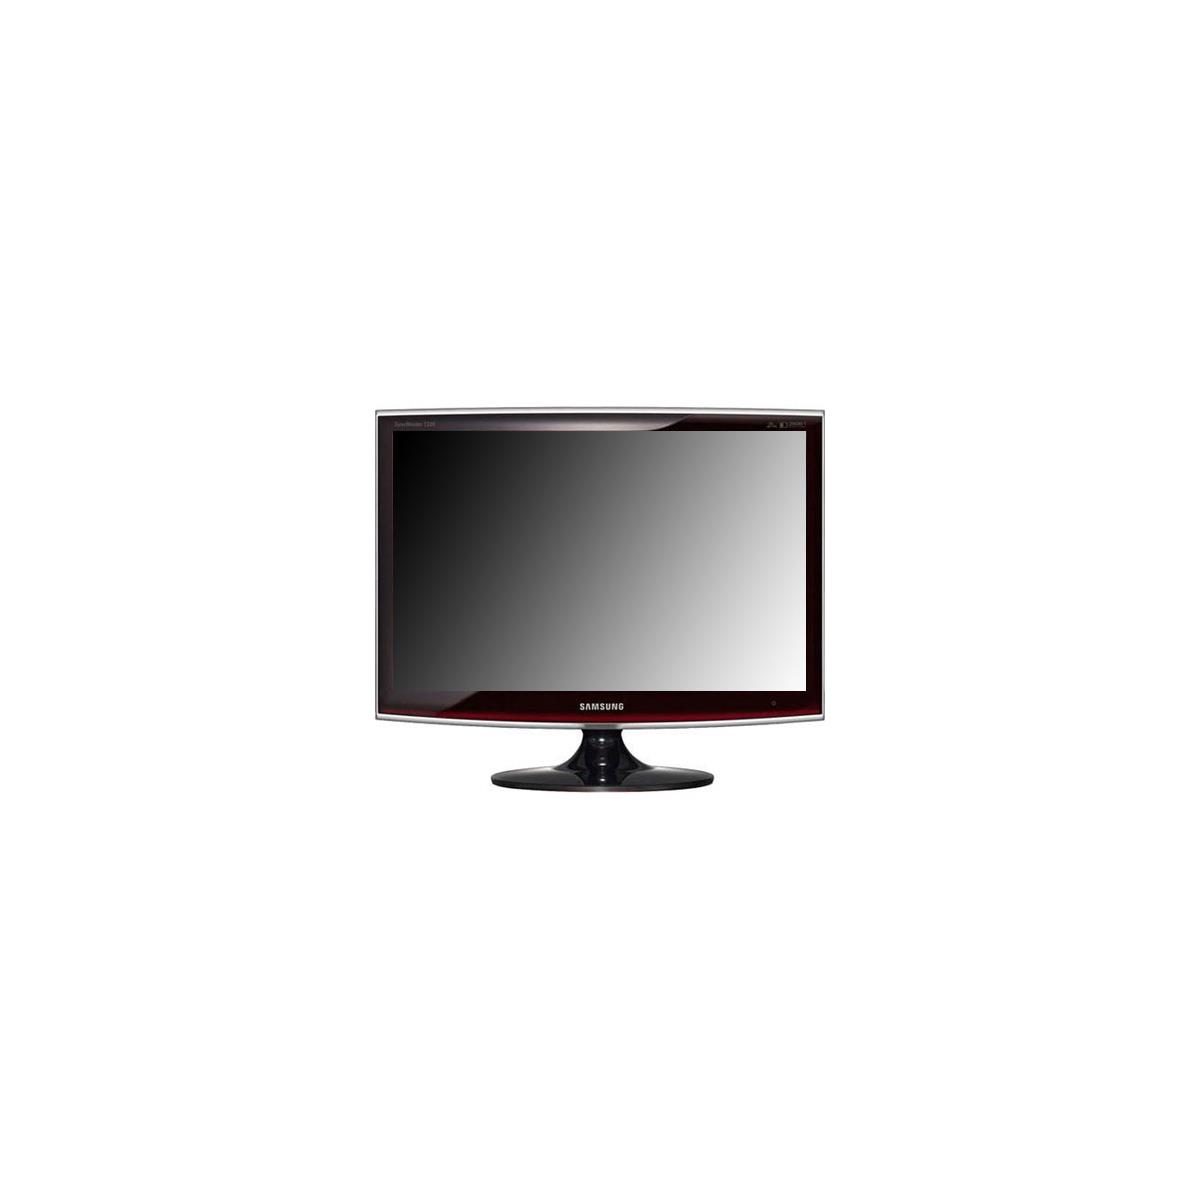 22" Widescreen LCD Computer Monitor, 1680 x 1050 Resolution, 10,000:1 Dynamic Contrast Ratio, Rose Black Bezel Tint Edges - Samsung T220HD